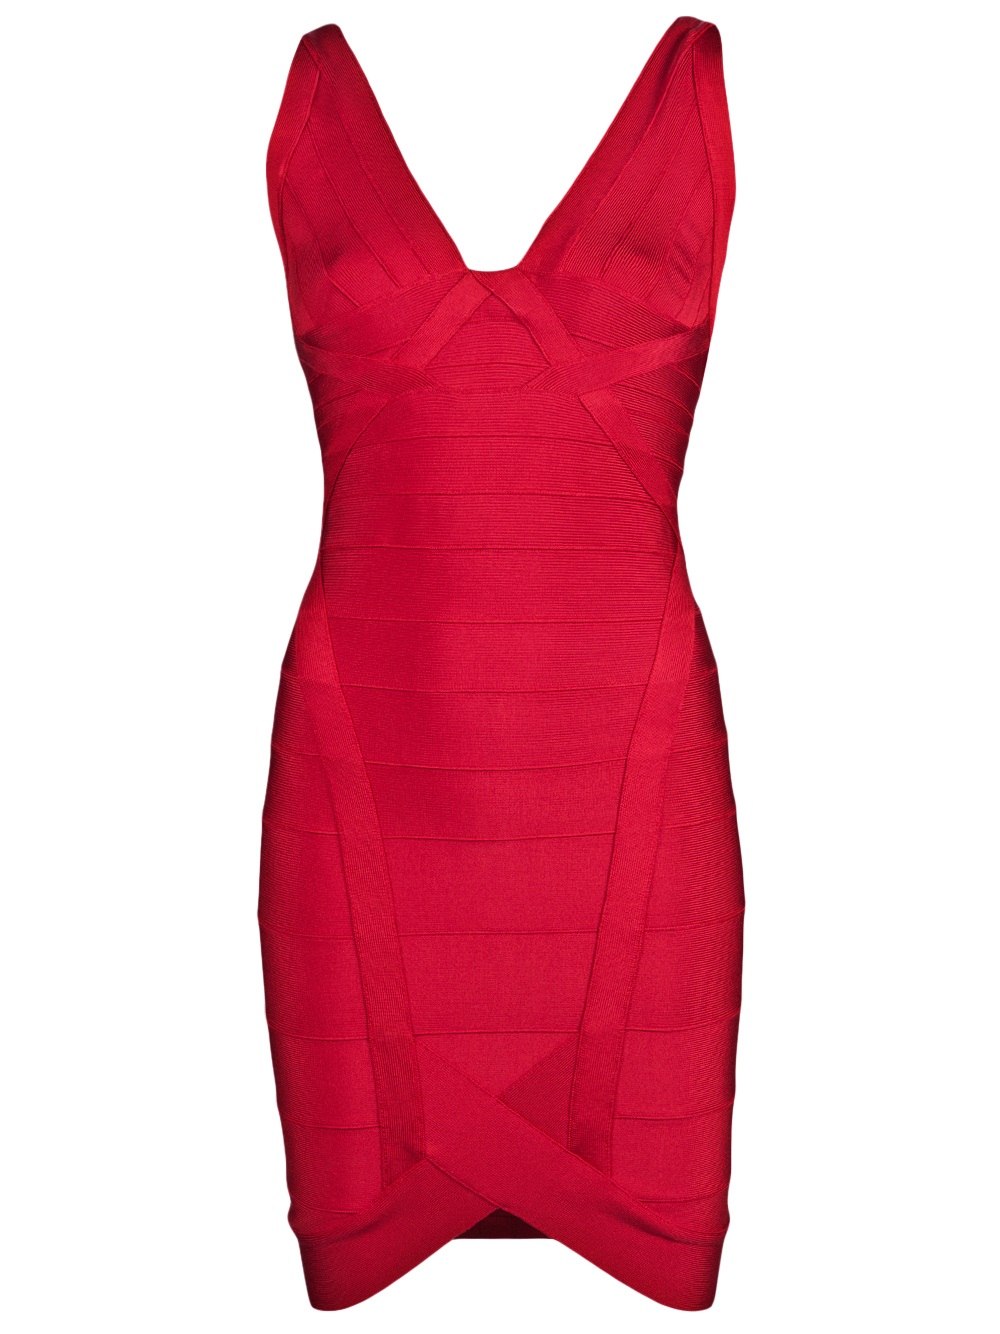 Lyst - Hervé Léger Ari Plunging Vneck Dress in Red